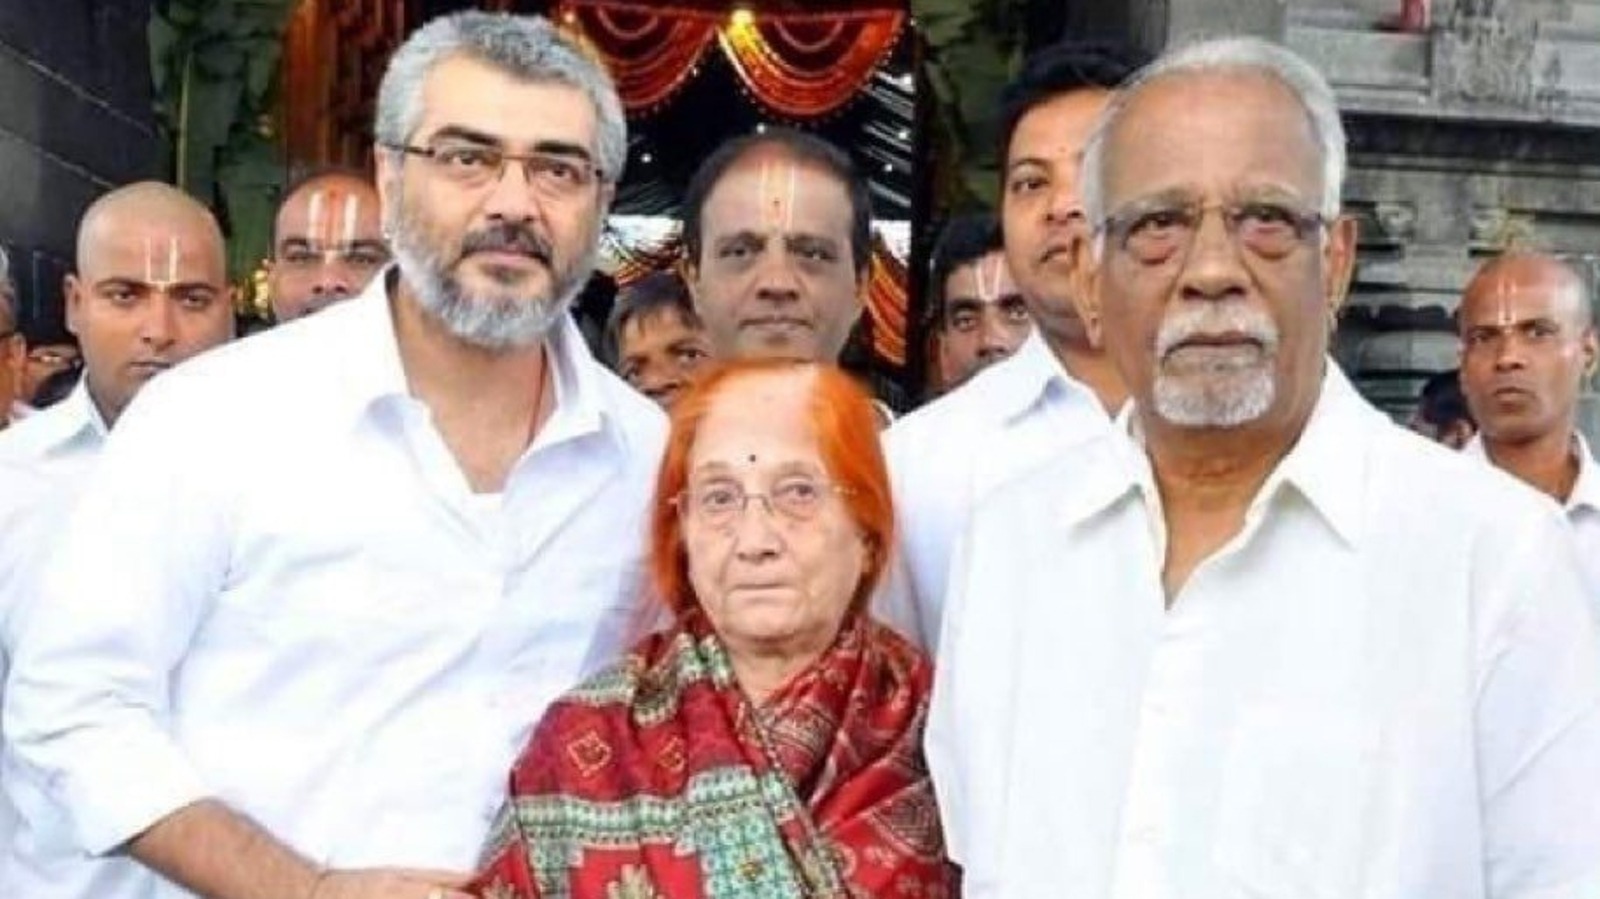 SJ Surya condolence to demise of Ajith Father subramaniyan 